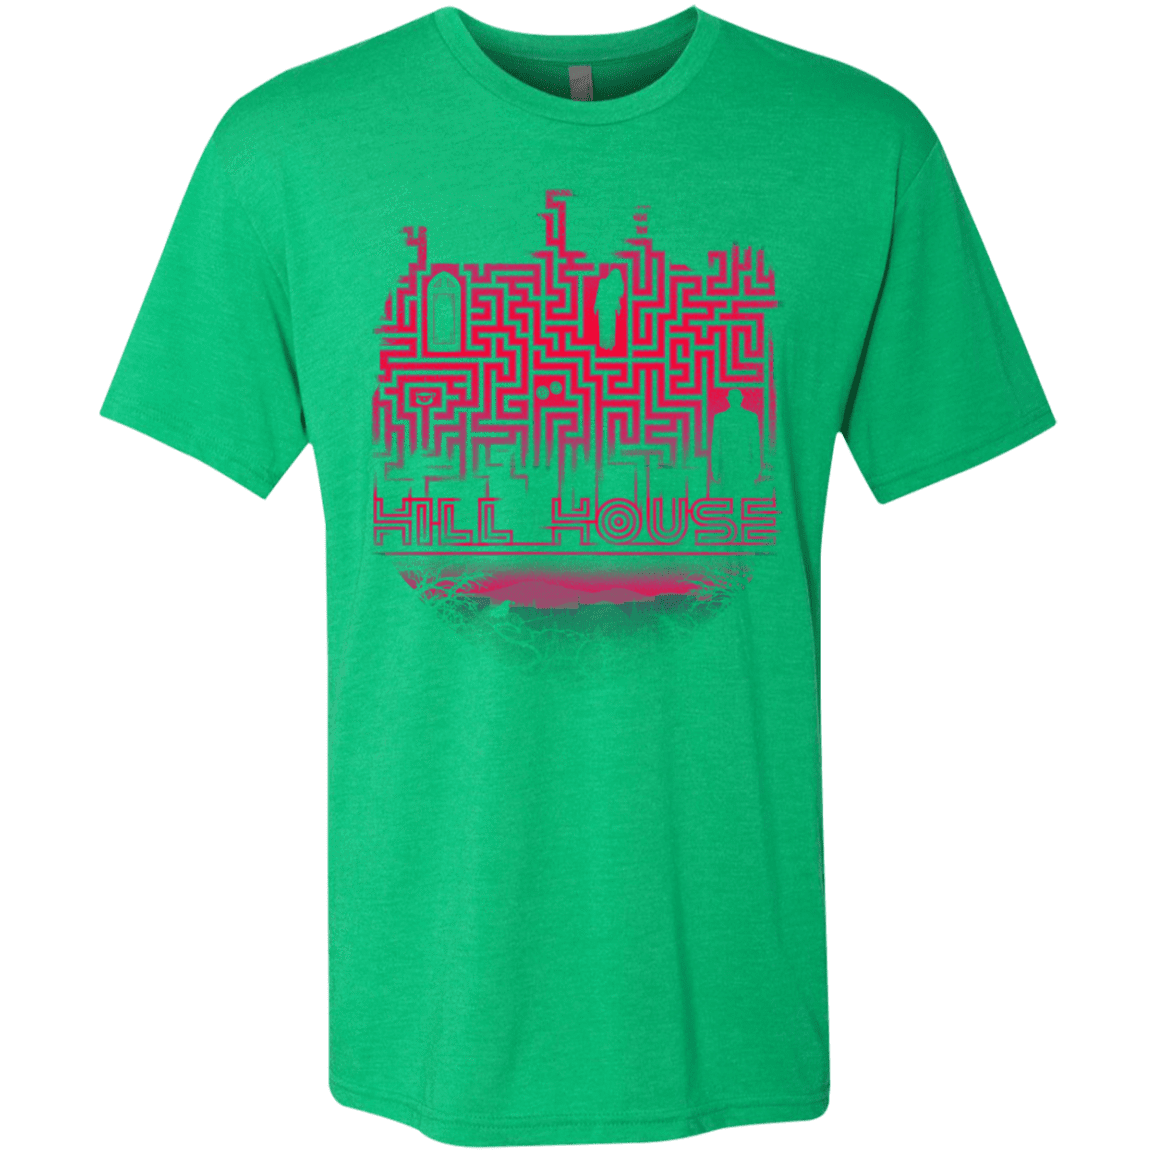 T-Shirts Envy / S Hill House Silhouette Men's Triblend T-Shirt